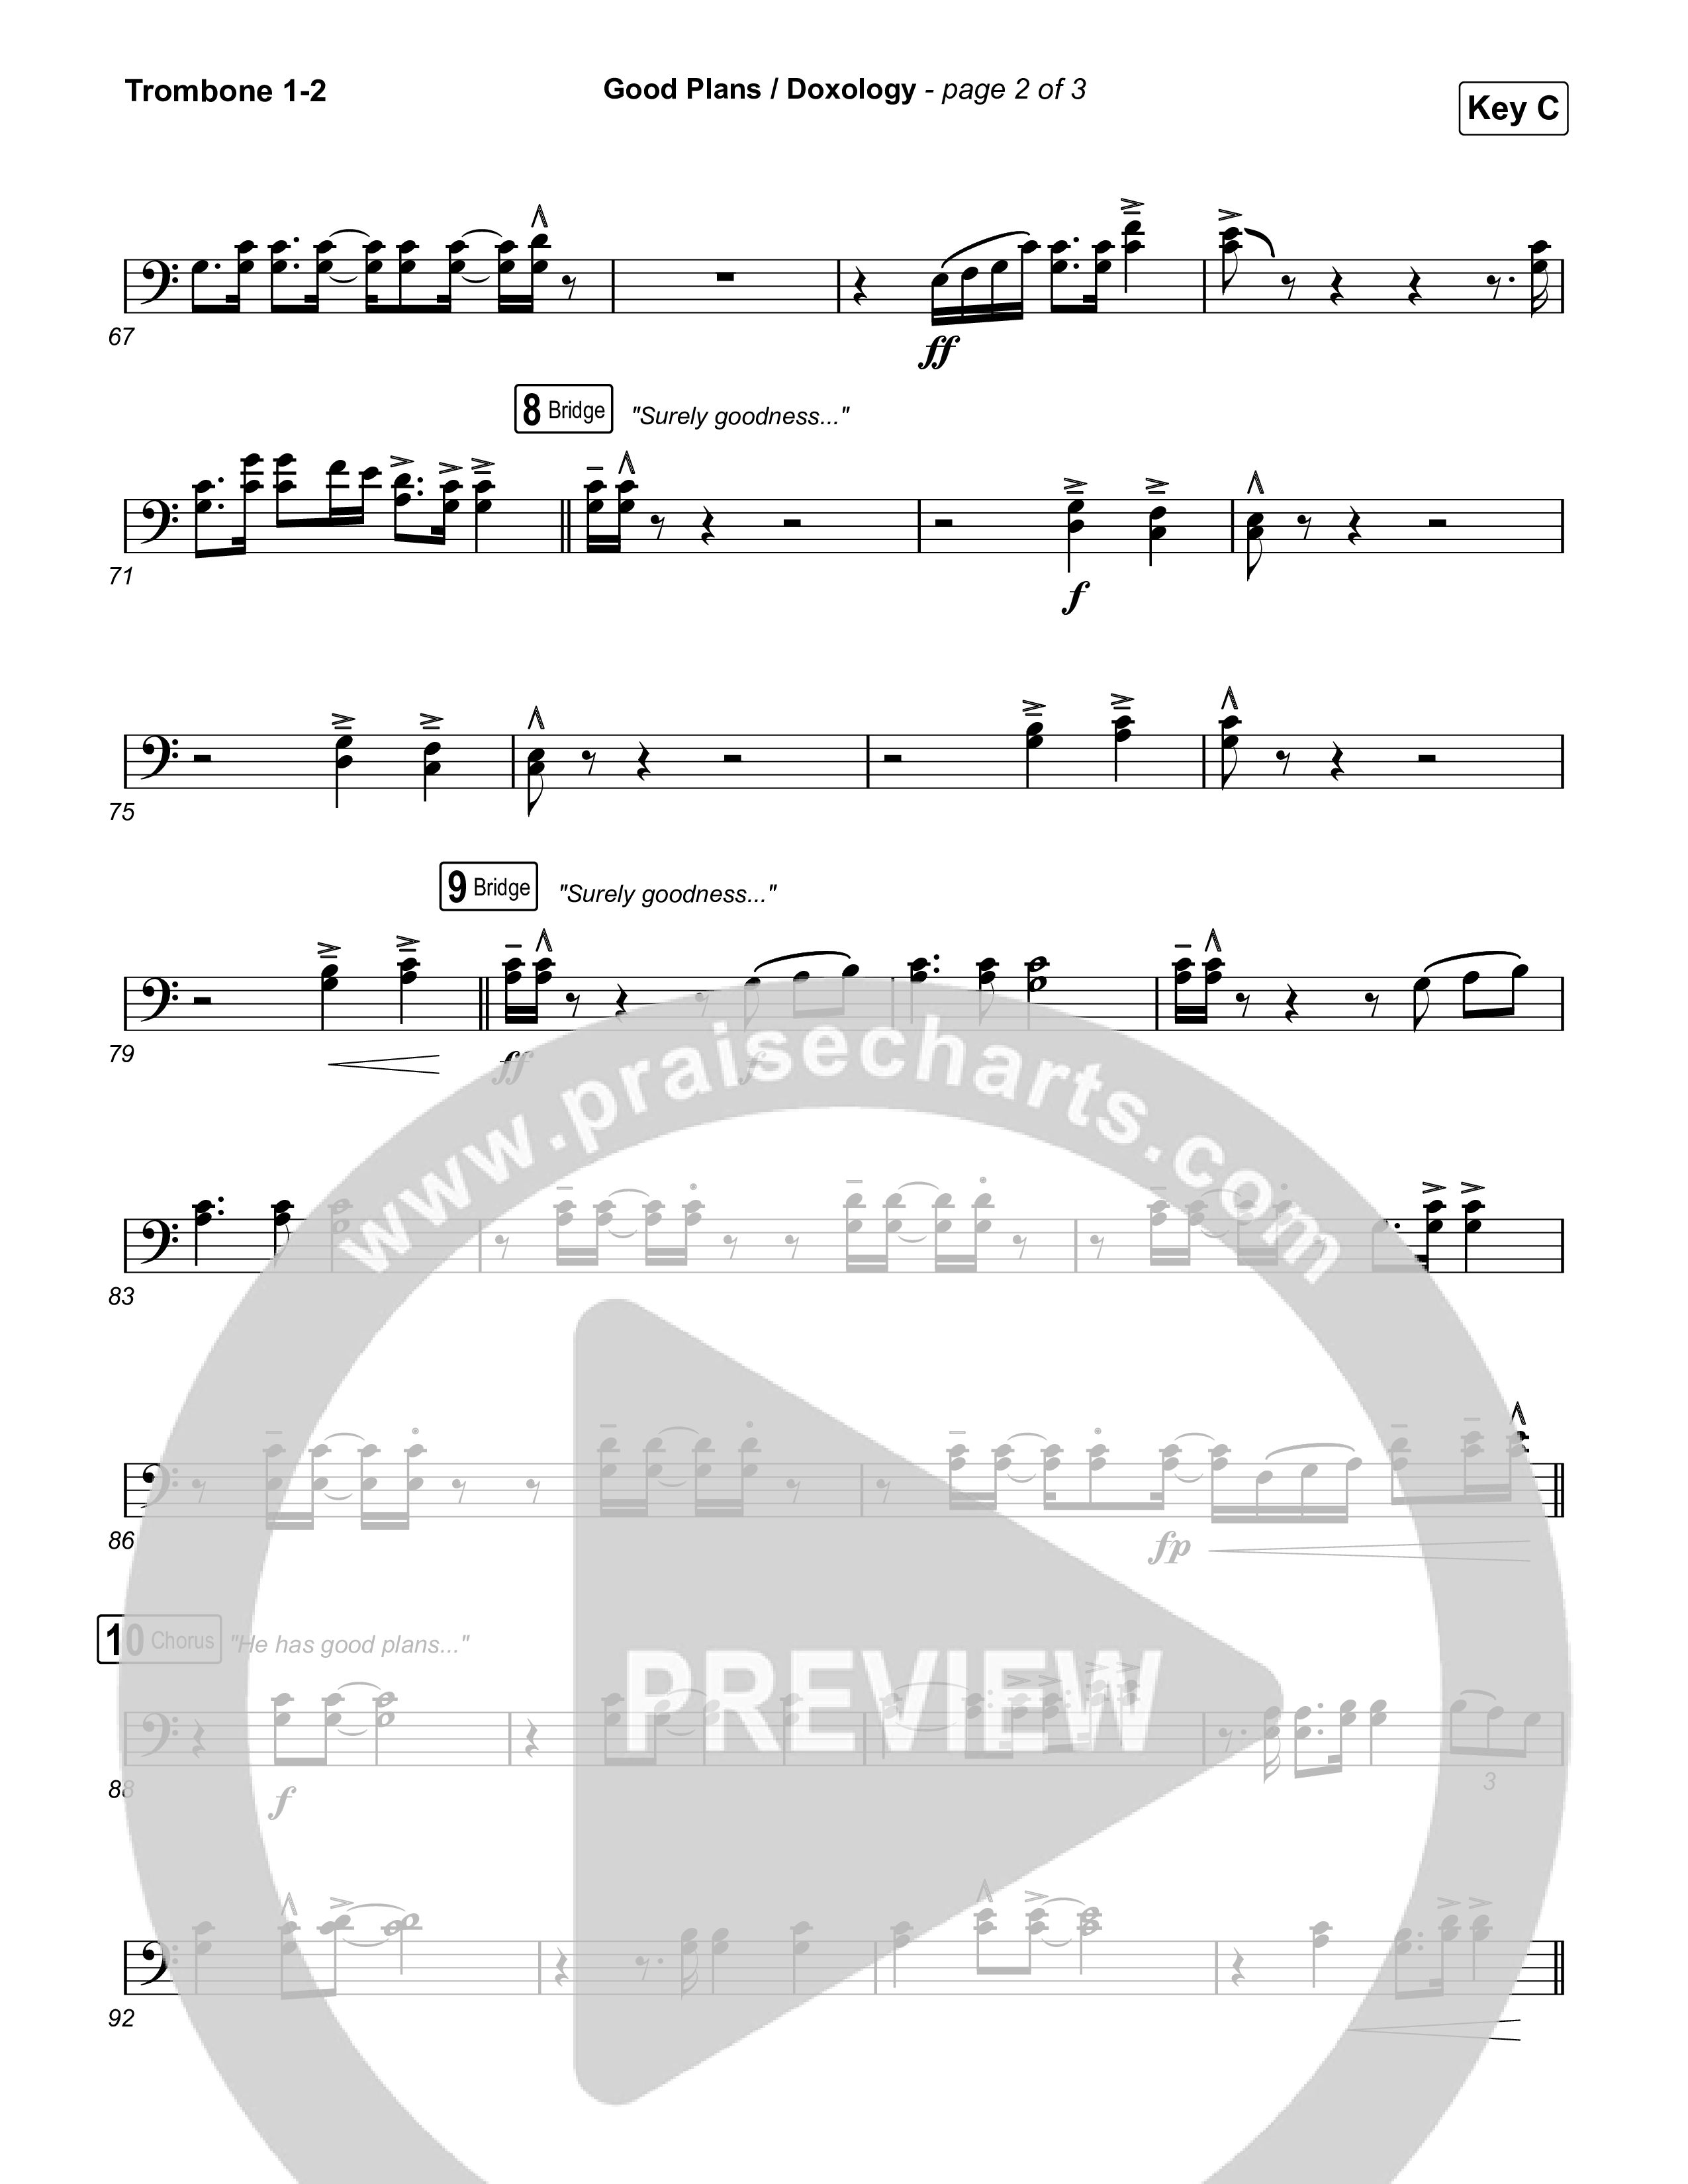 Good Plans/Doxology Trombone 1/2 (Red Rocks Worship)